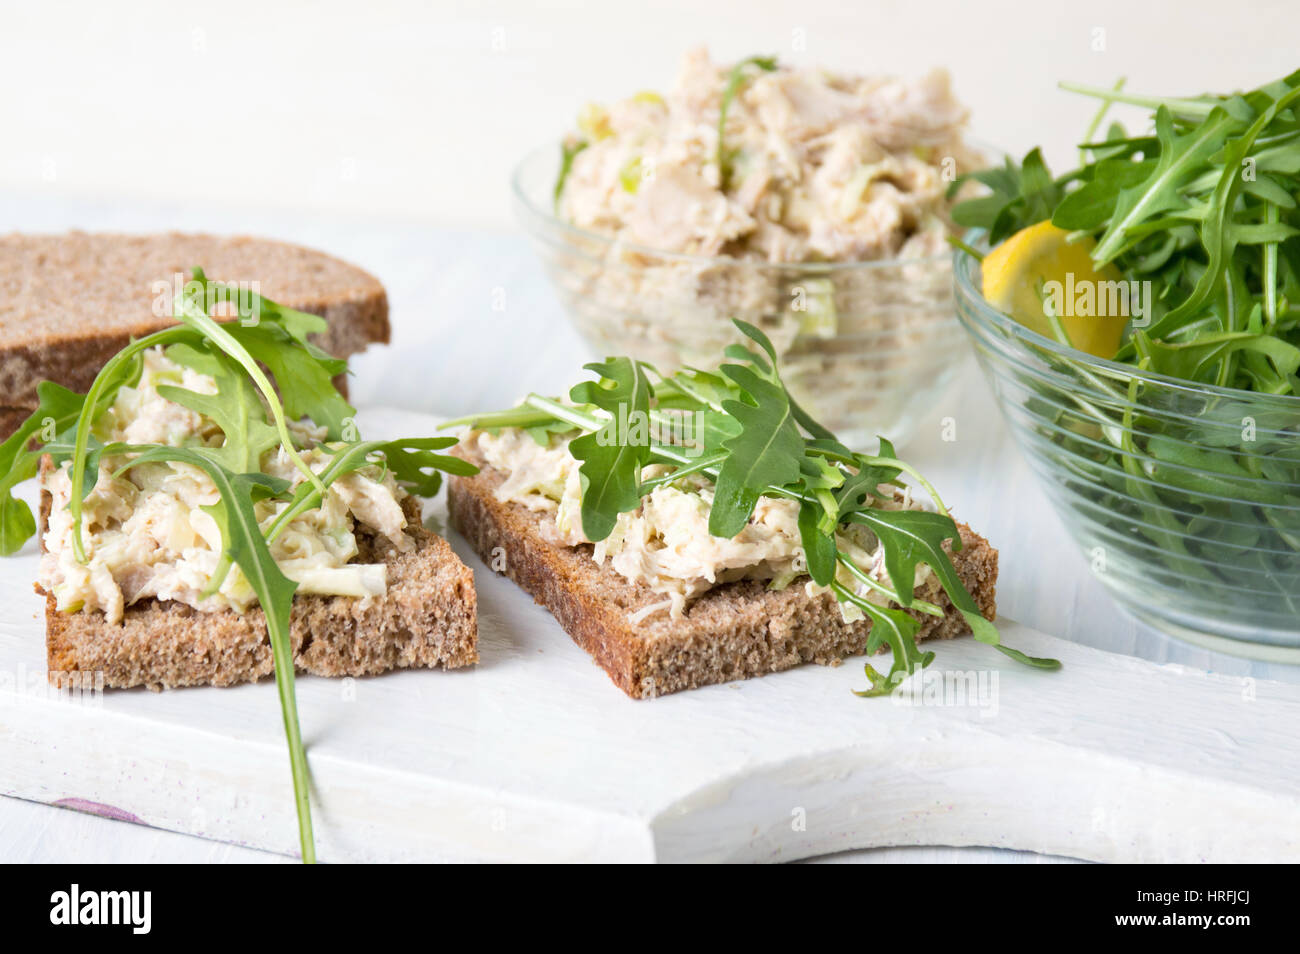 Chicken salad and arugula sandwich on wooden board Stock Photo